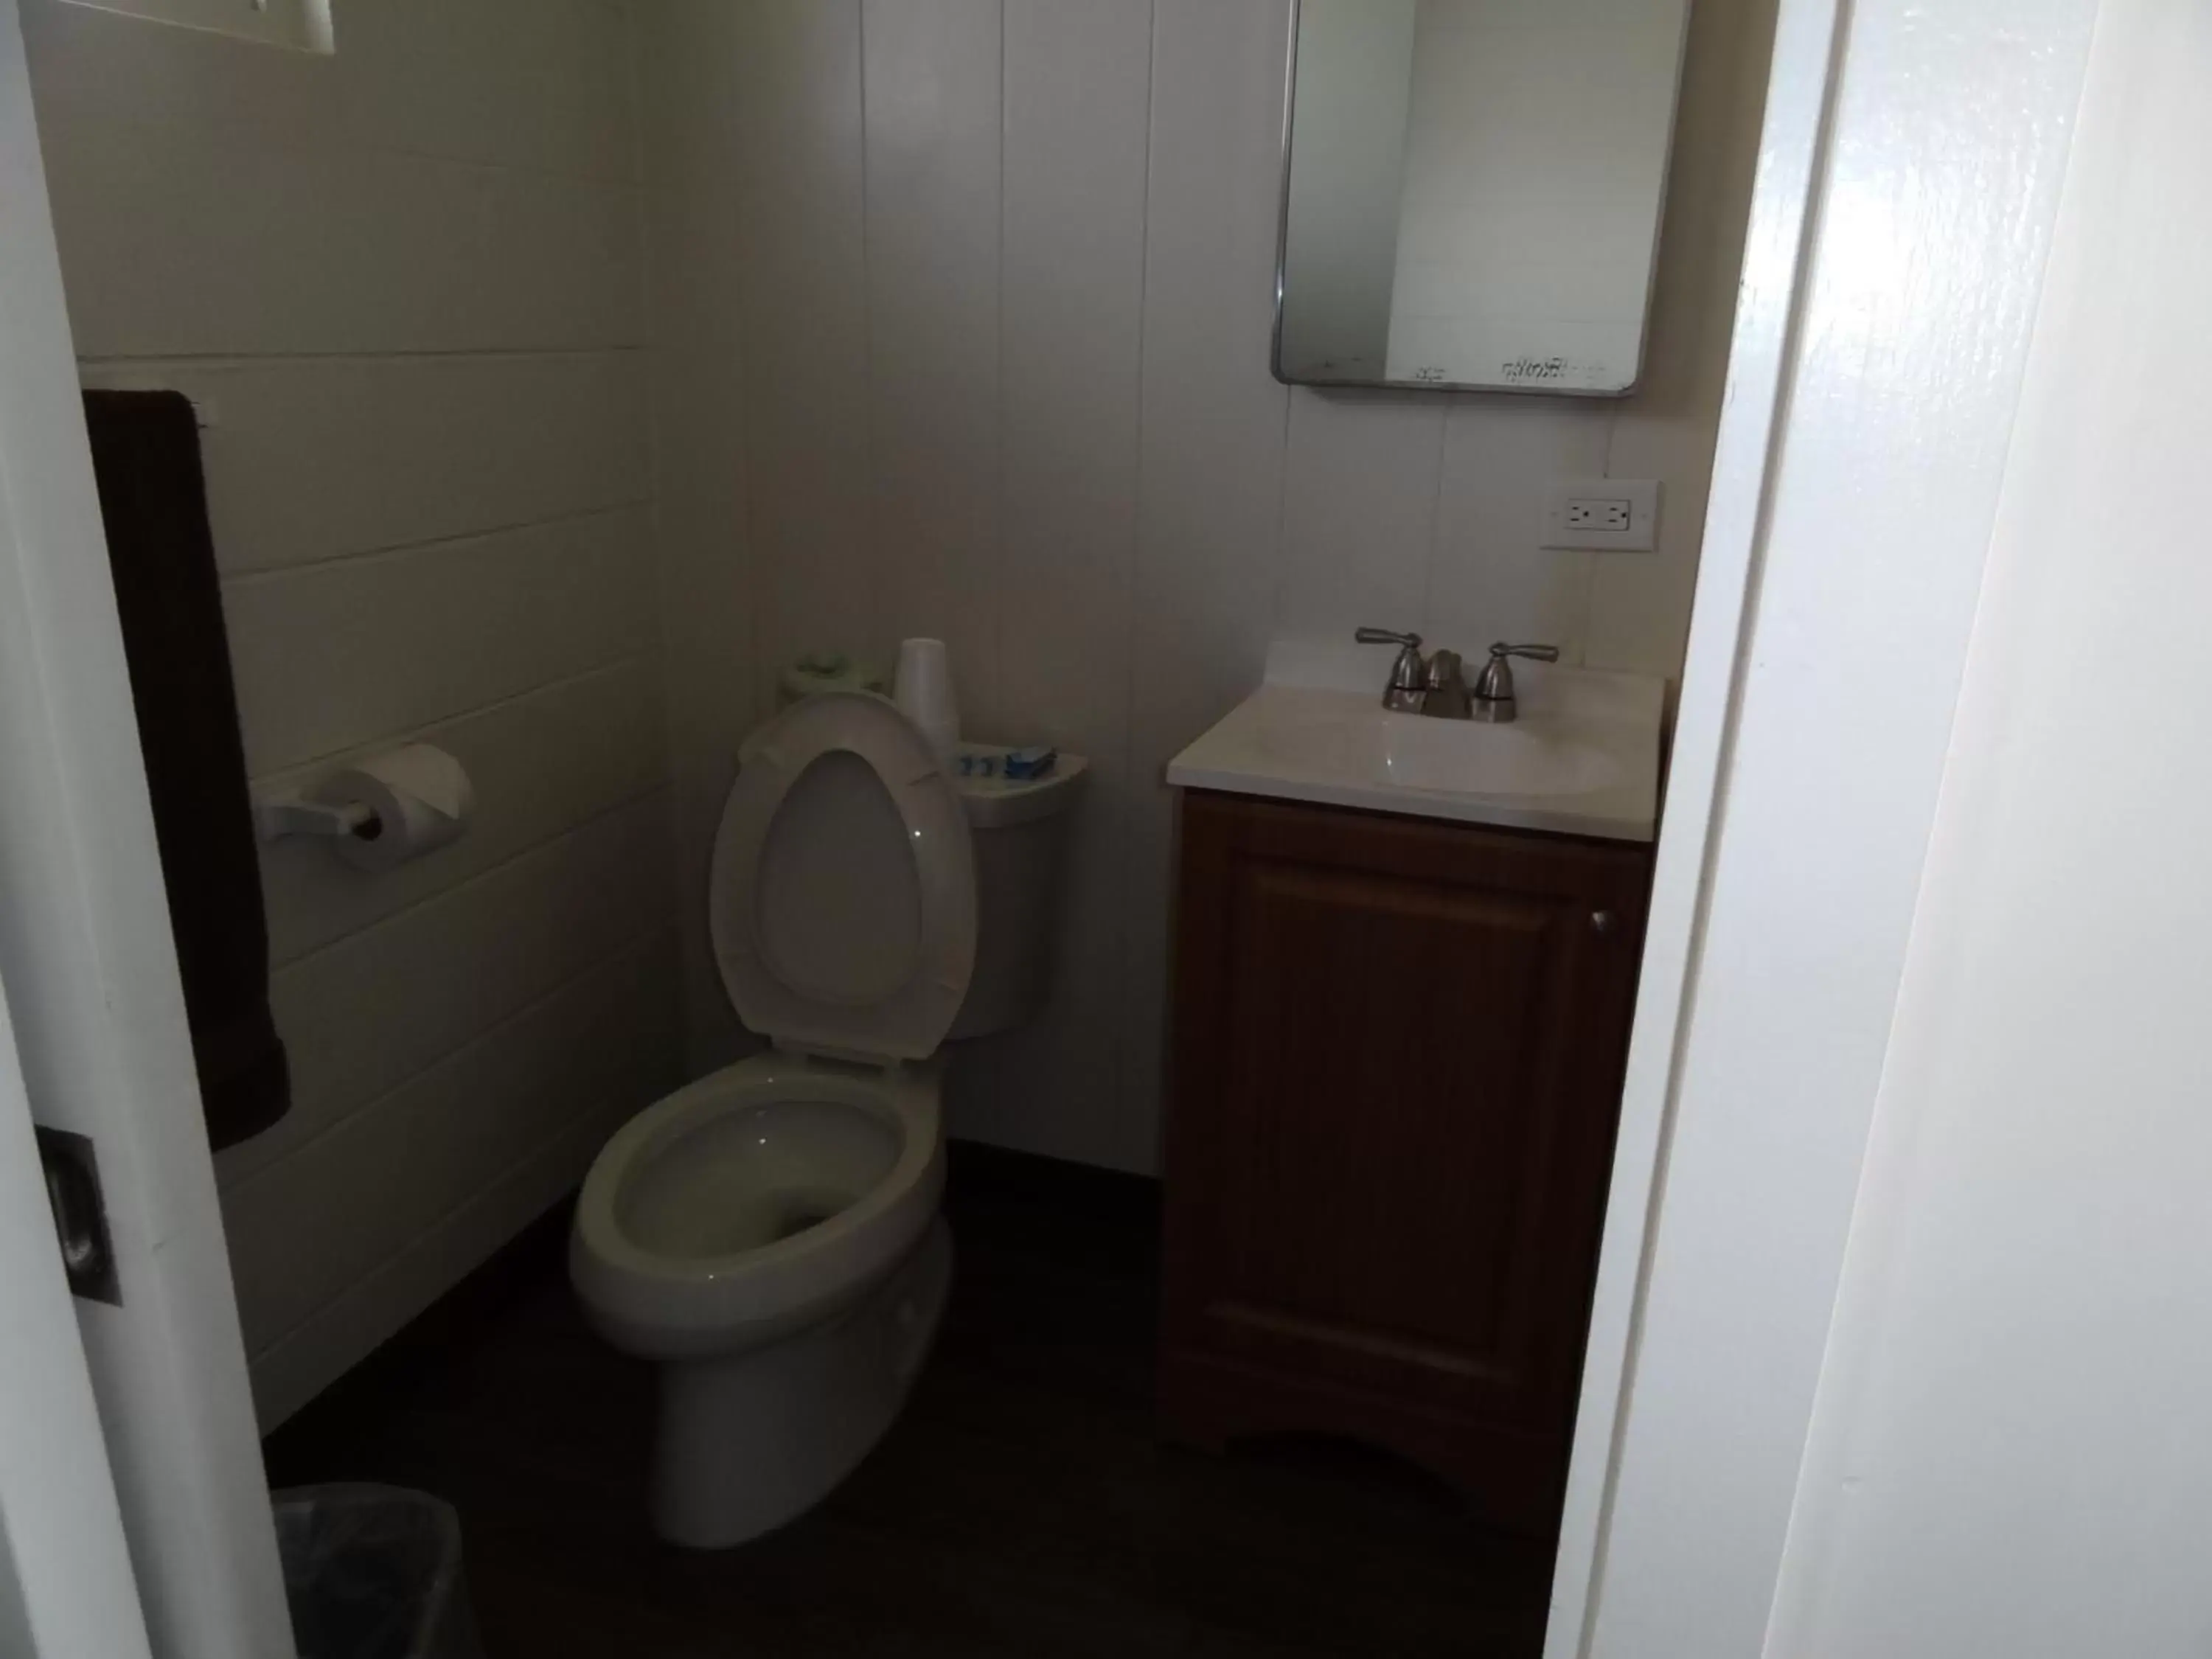 Bathroom in Tip Top Motel